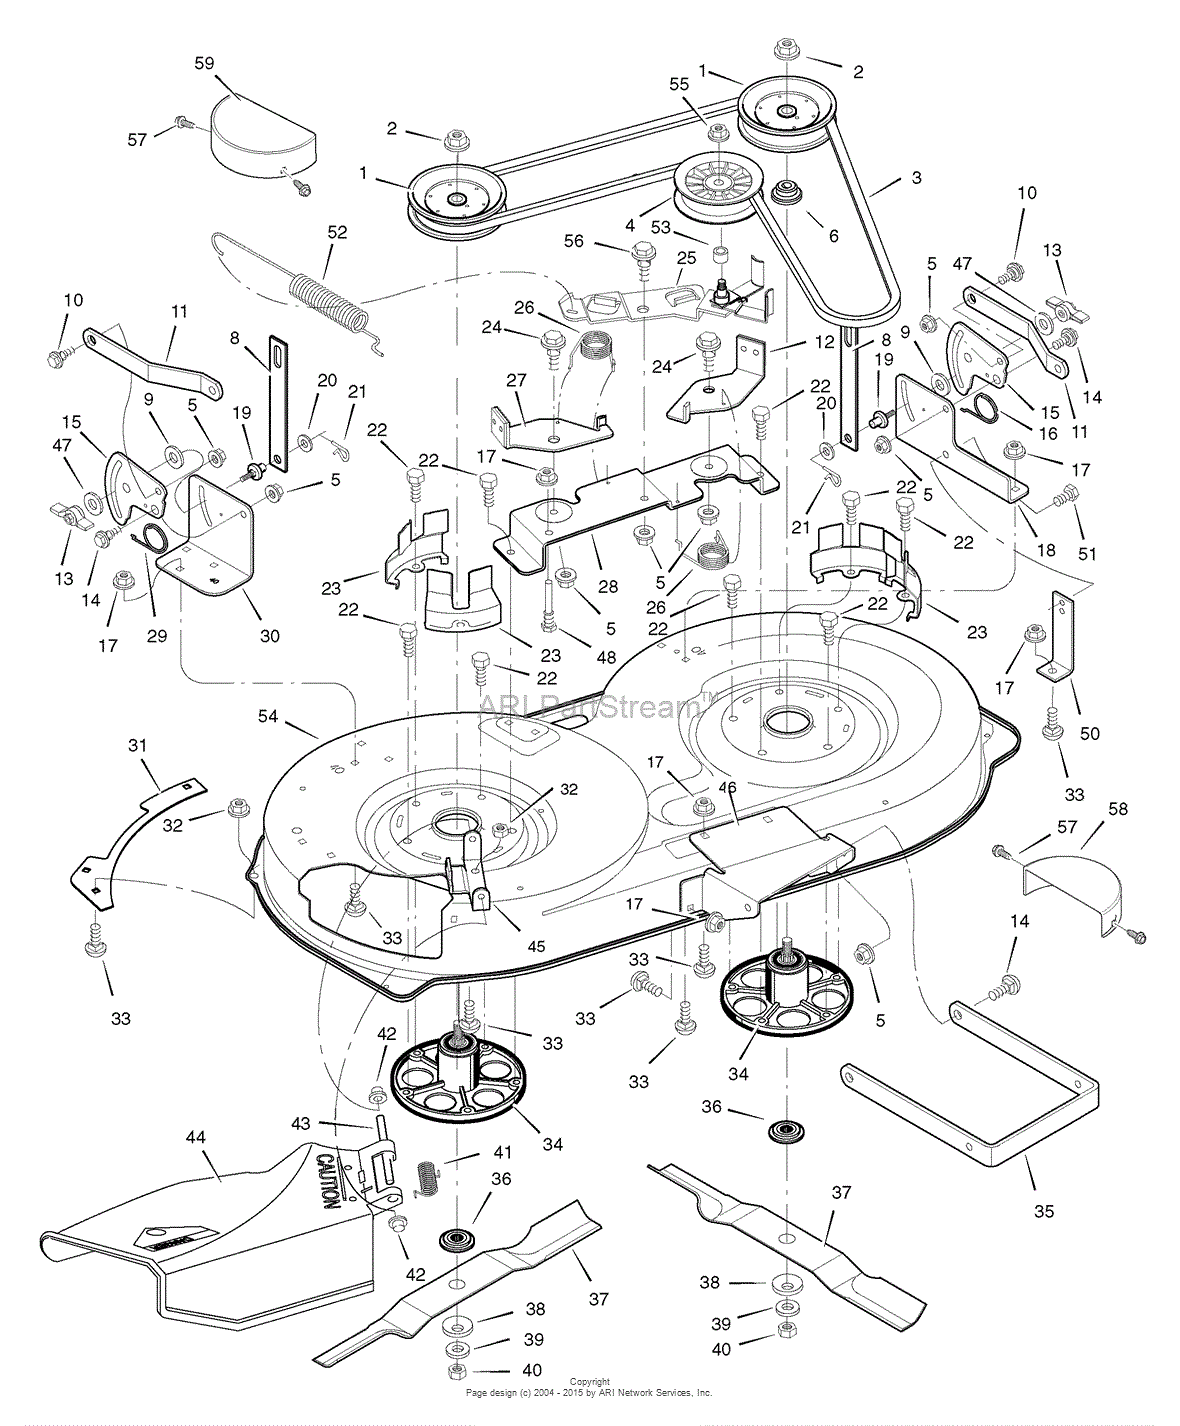 26 Murray Lawn Mower Parts Diagram - Wiring Diagram List